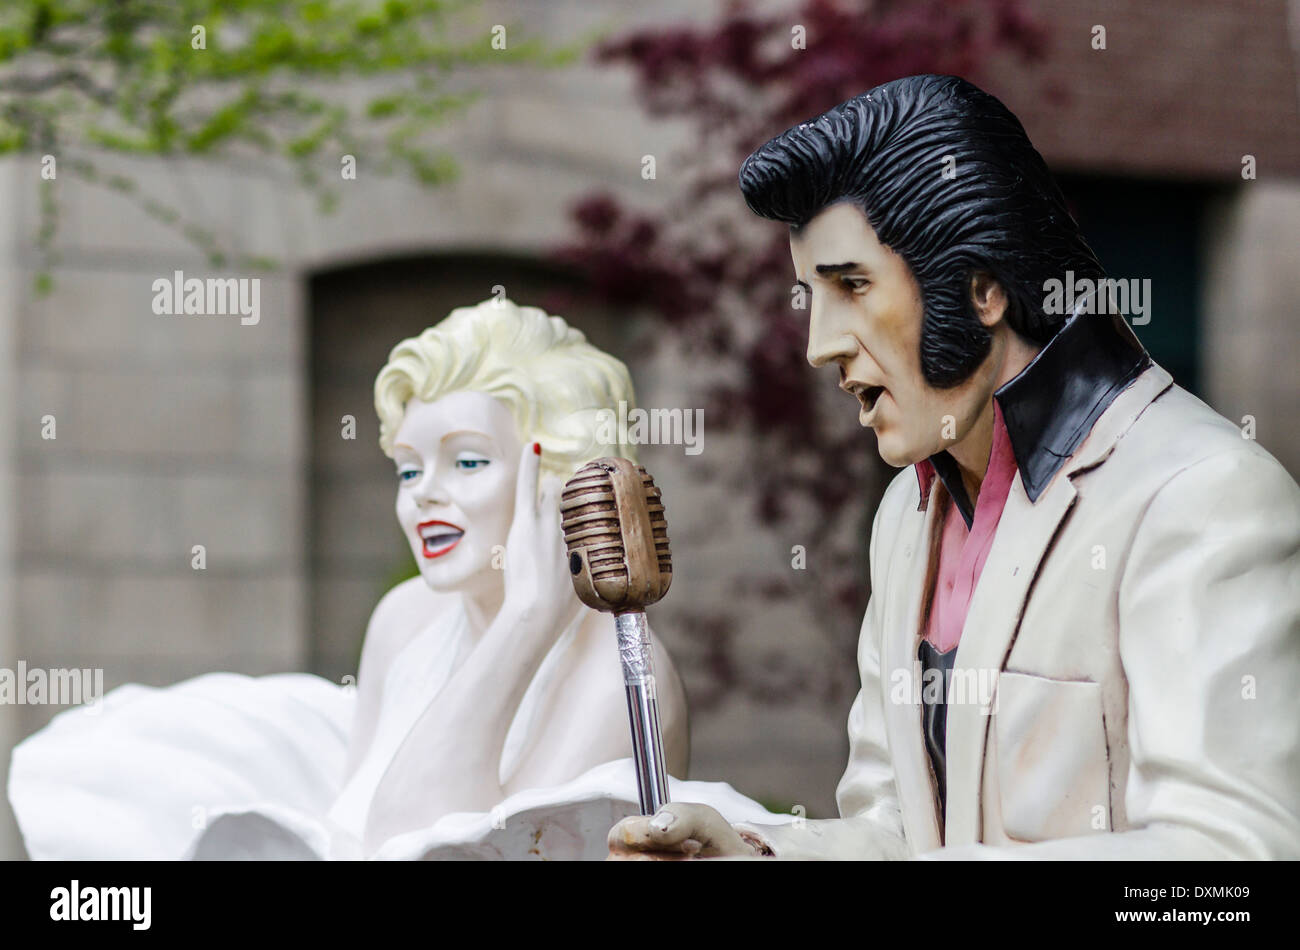 Elvis and marilyn 1998)   imdb